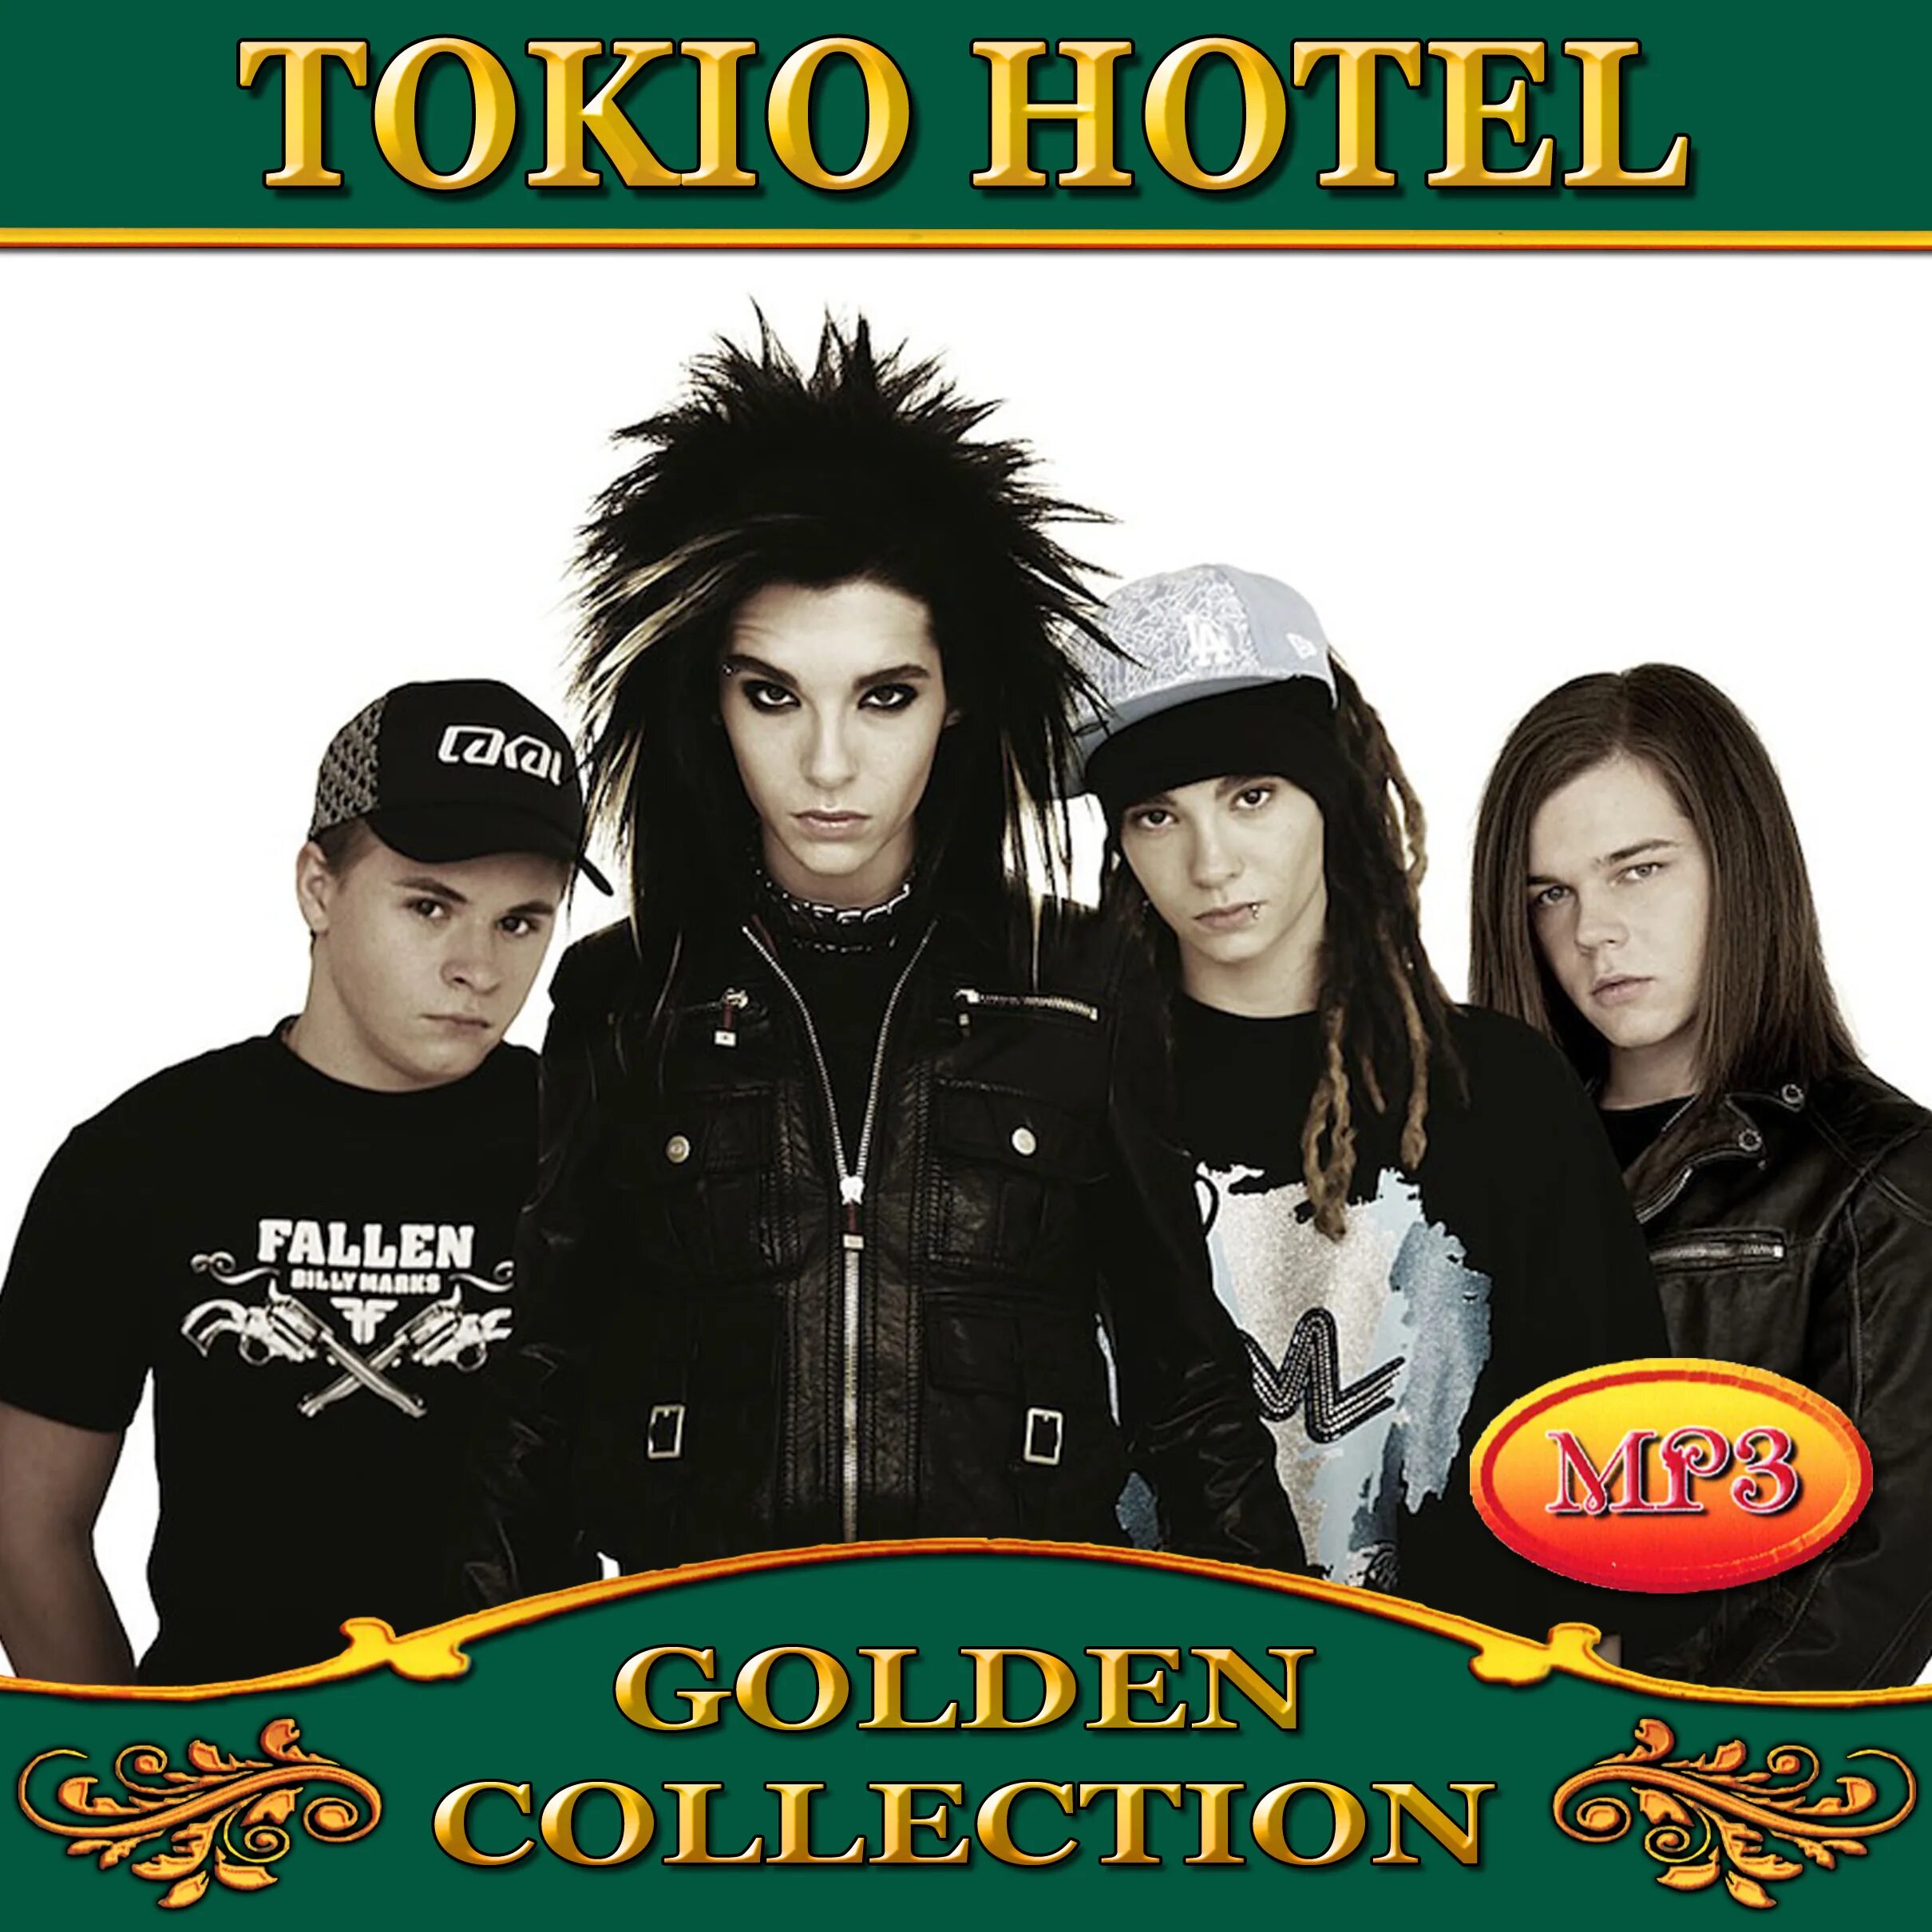 Tokyo mp3. Монсун группа Токио отель. Tokio Hotel 2009. Группа Токио хотел CD. Tokio Hotel 1000 Meere.